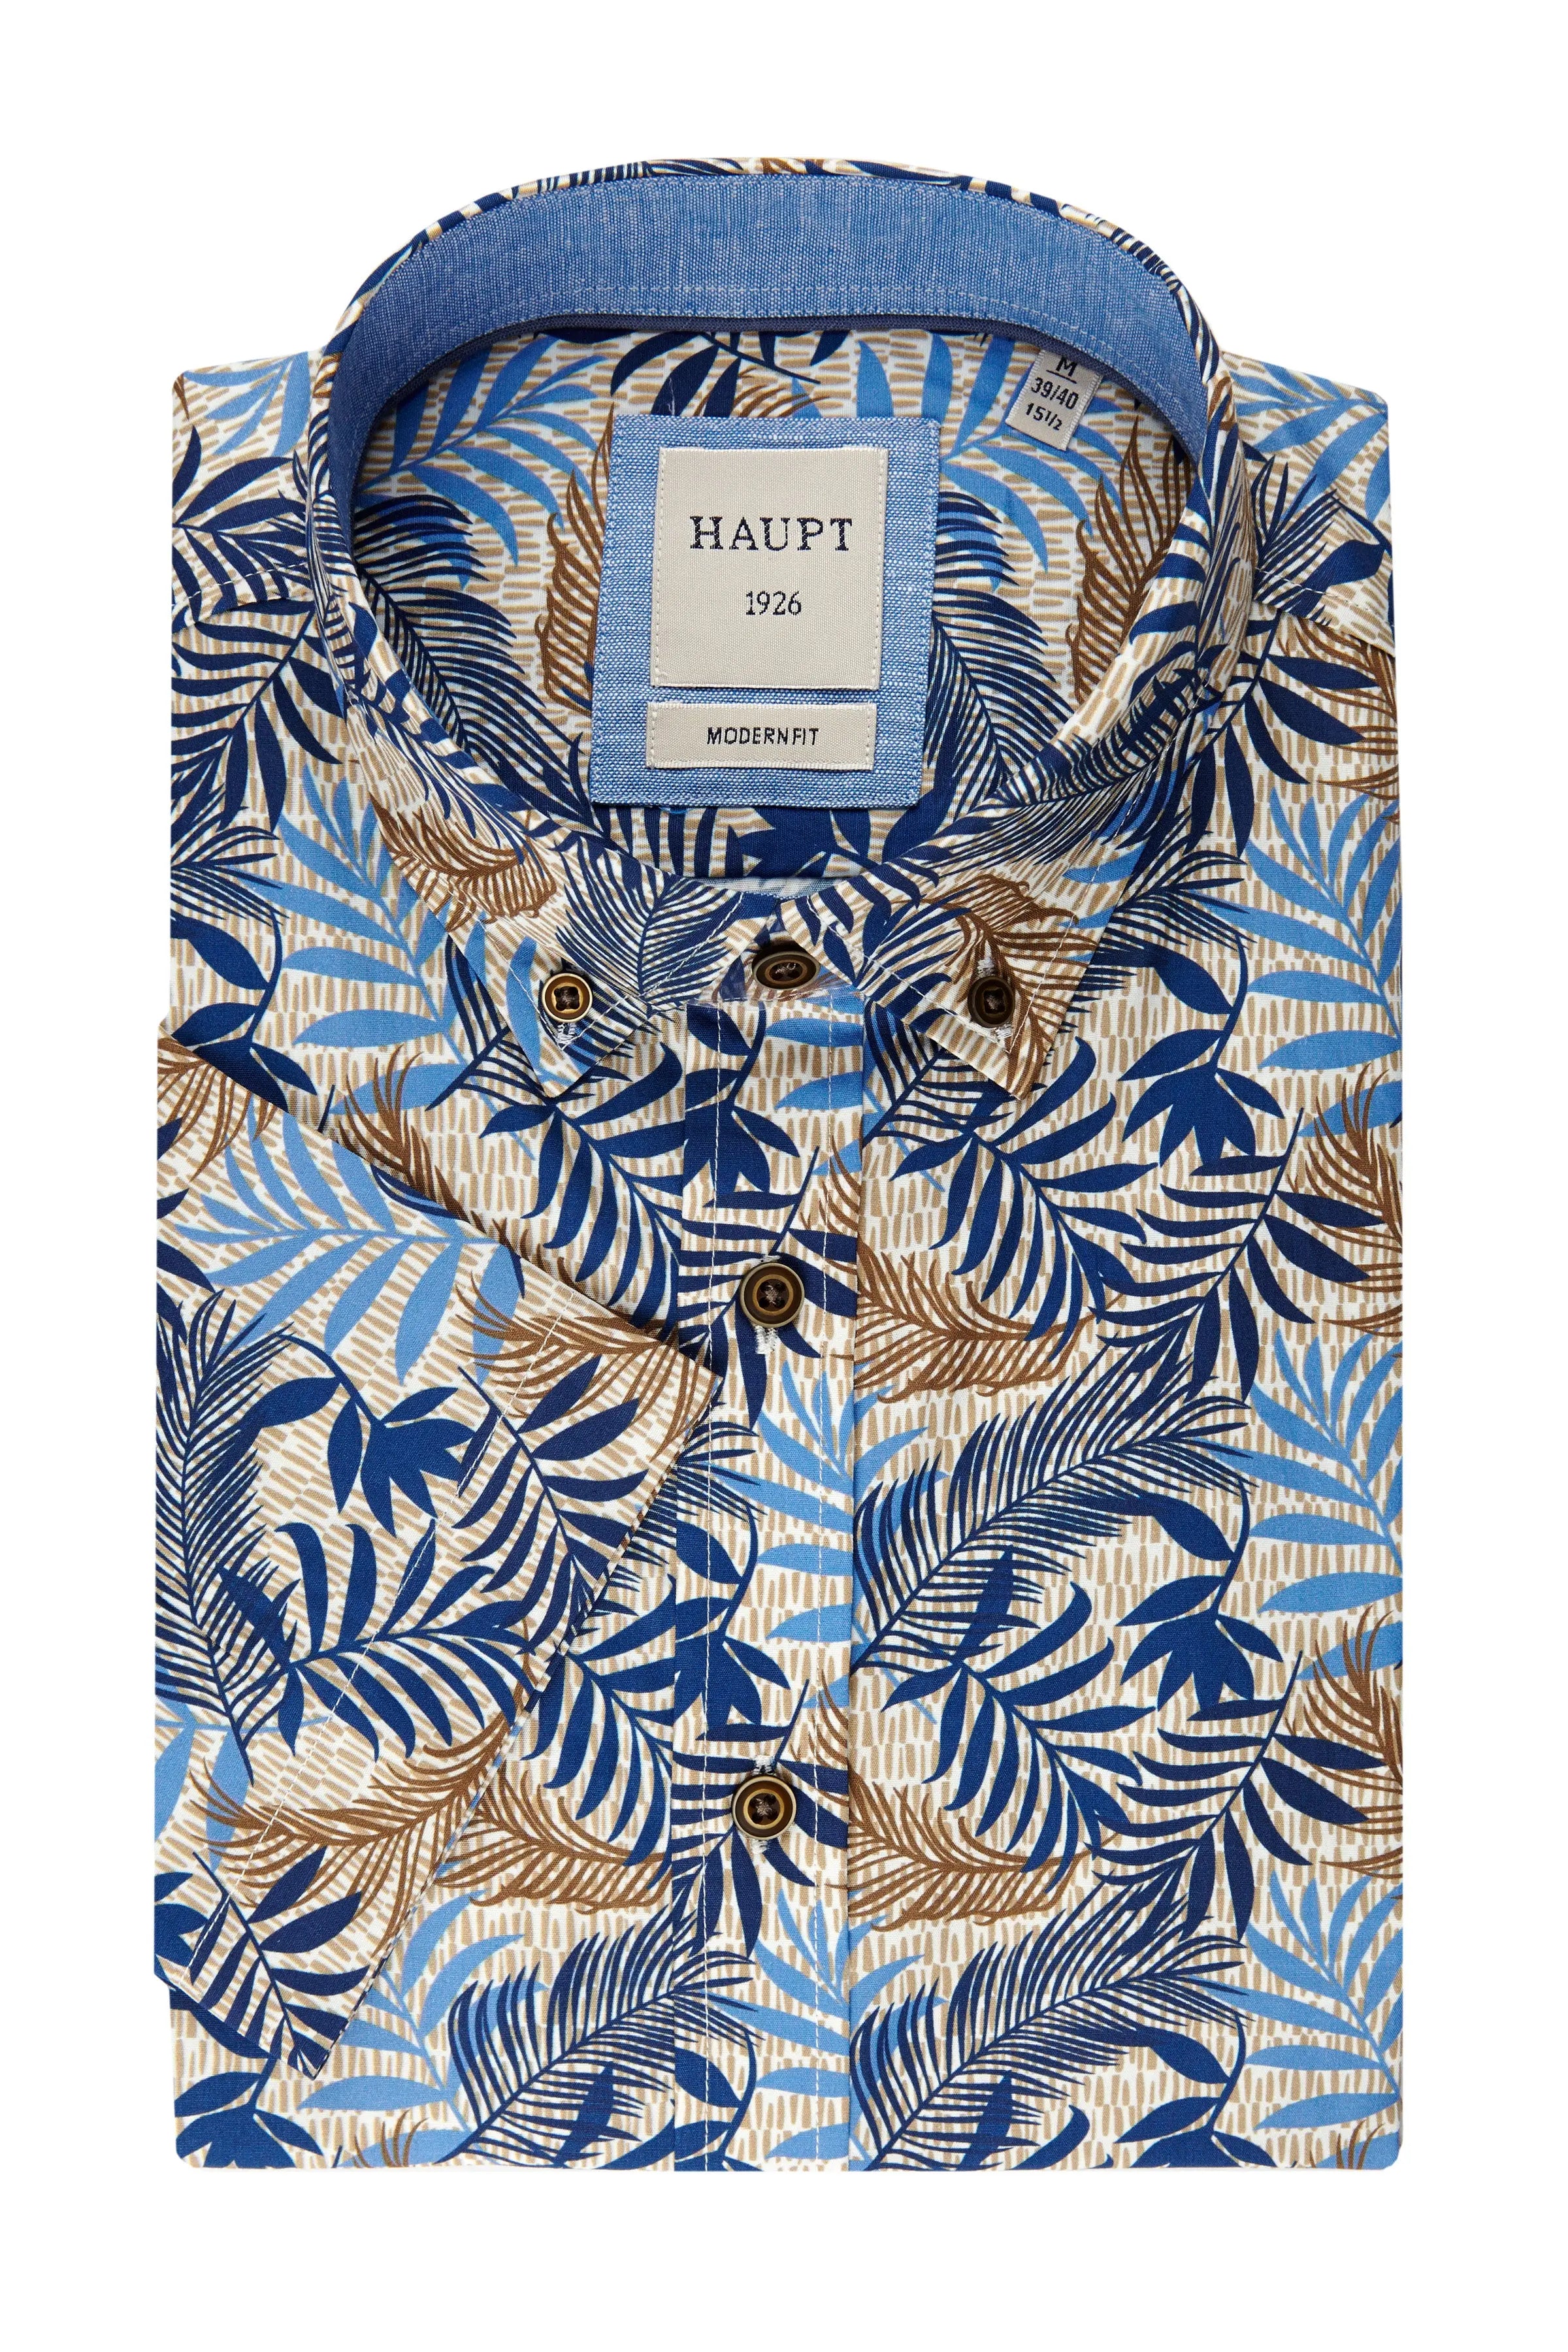 Baumwoll-Herrenhemd sand print Haupt